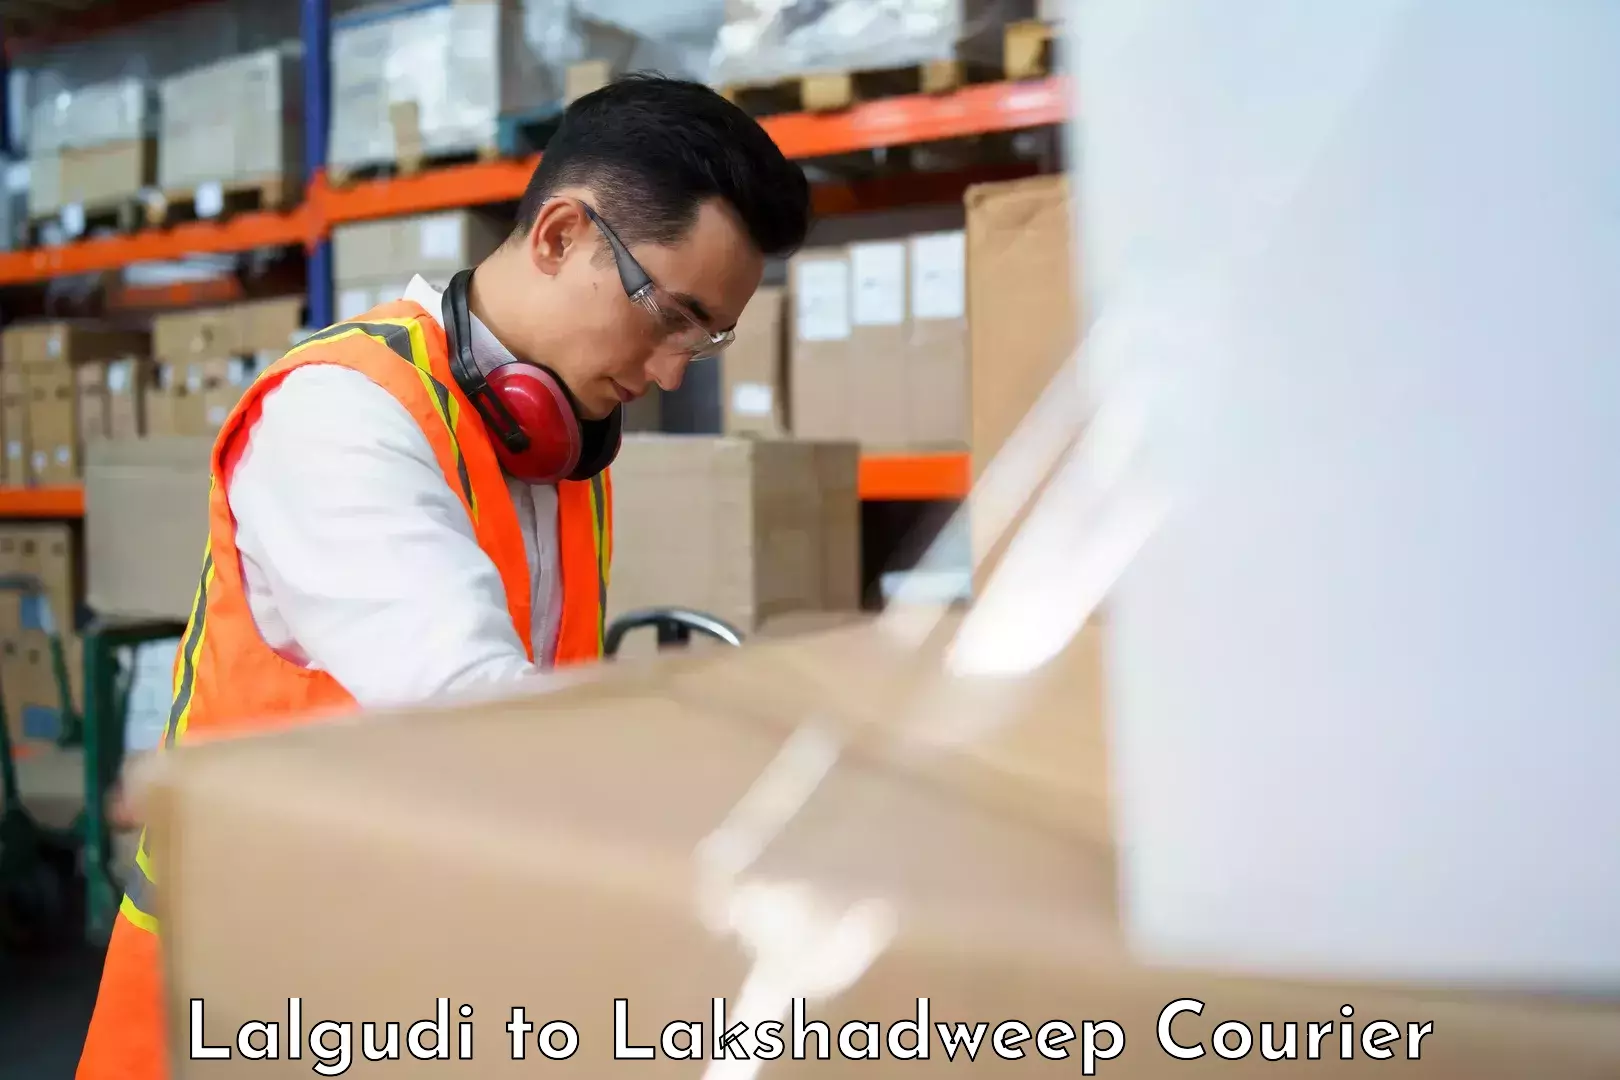 Professional moving company Lalgudi to Lakshadweep